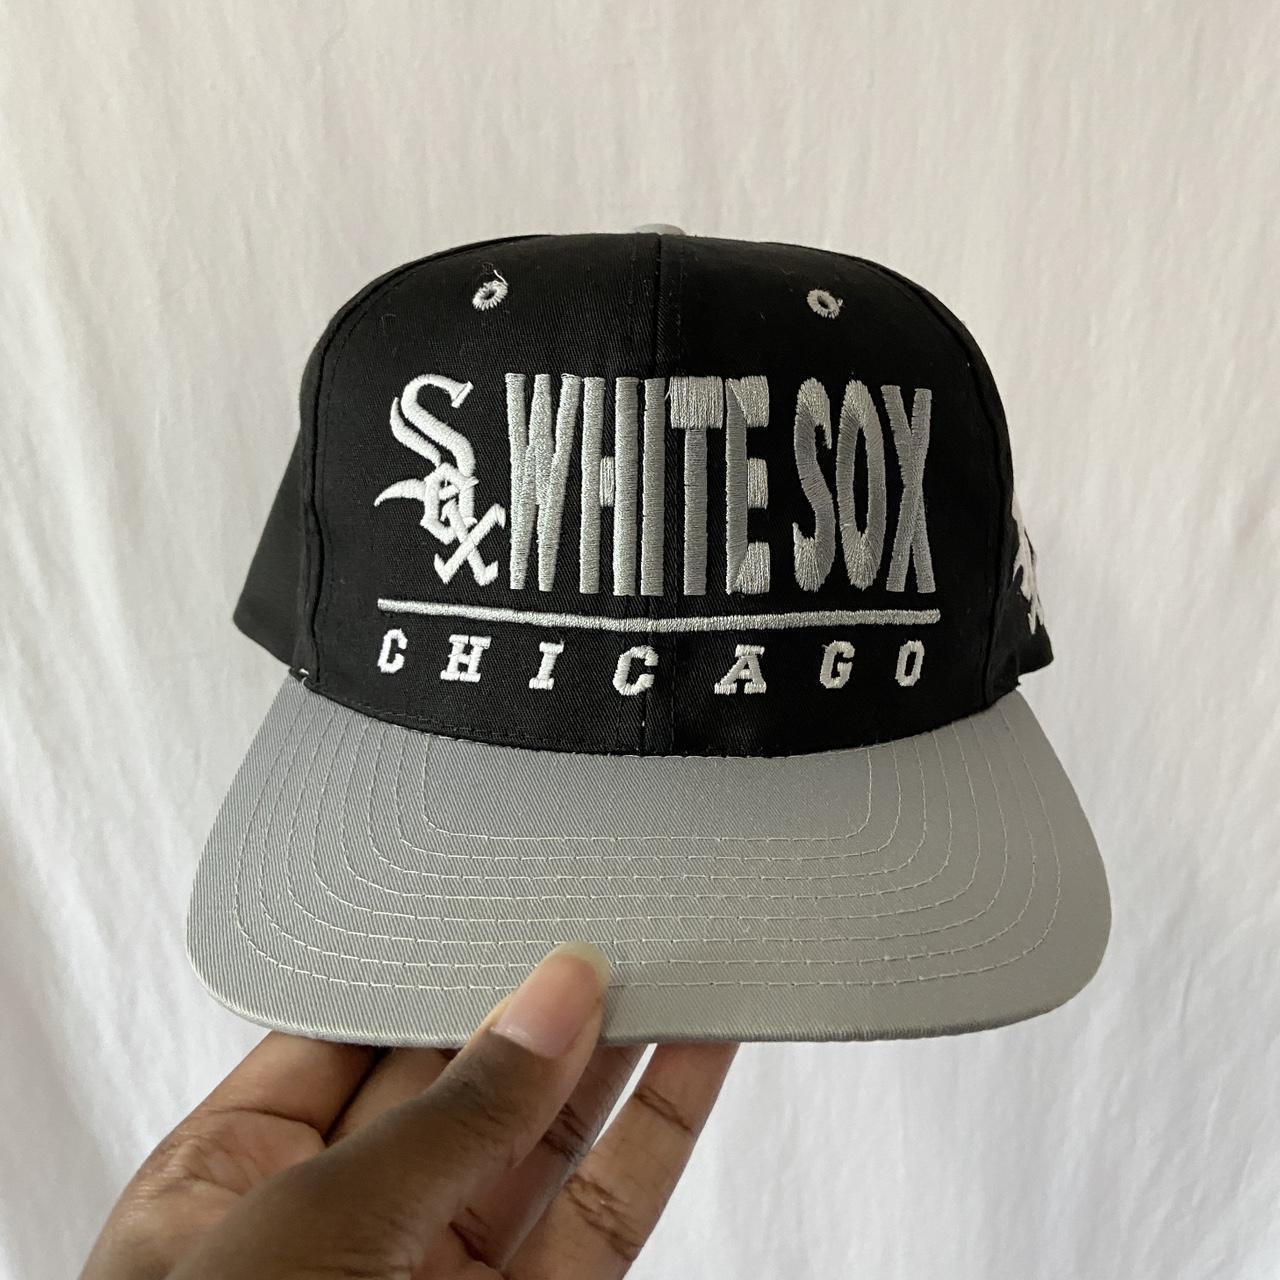 Vintage 1990 Chicago White Sox Comiskey Park - Depop